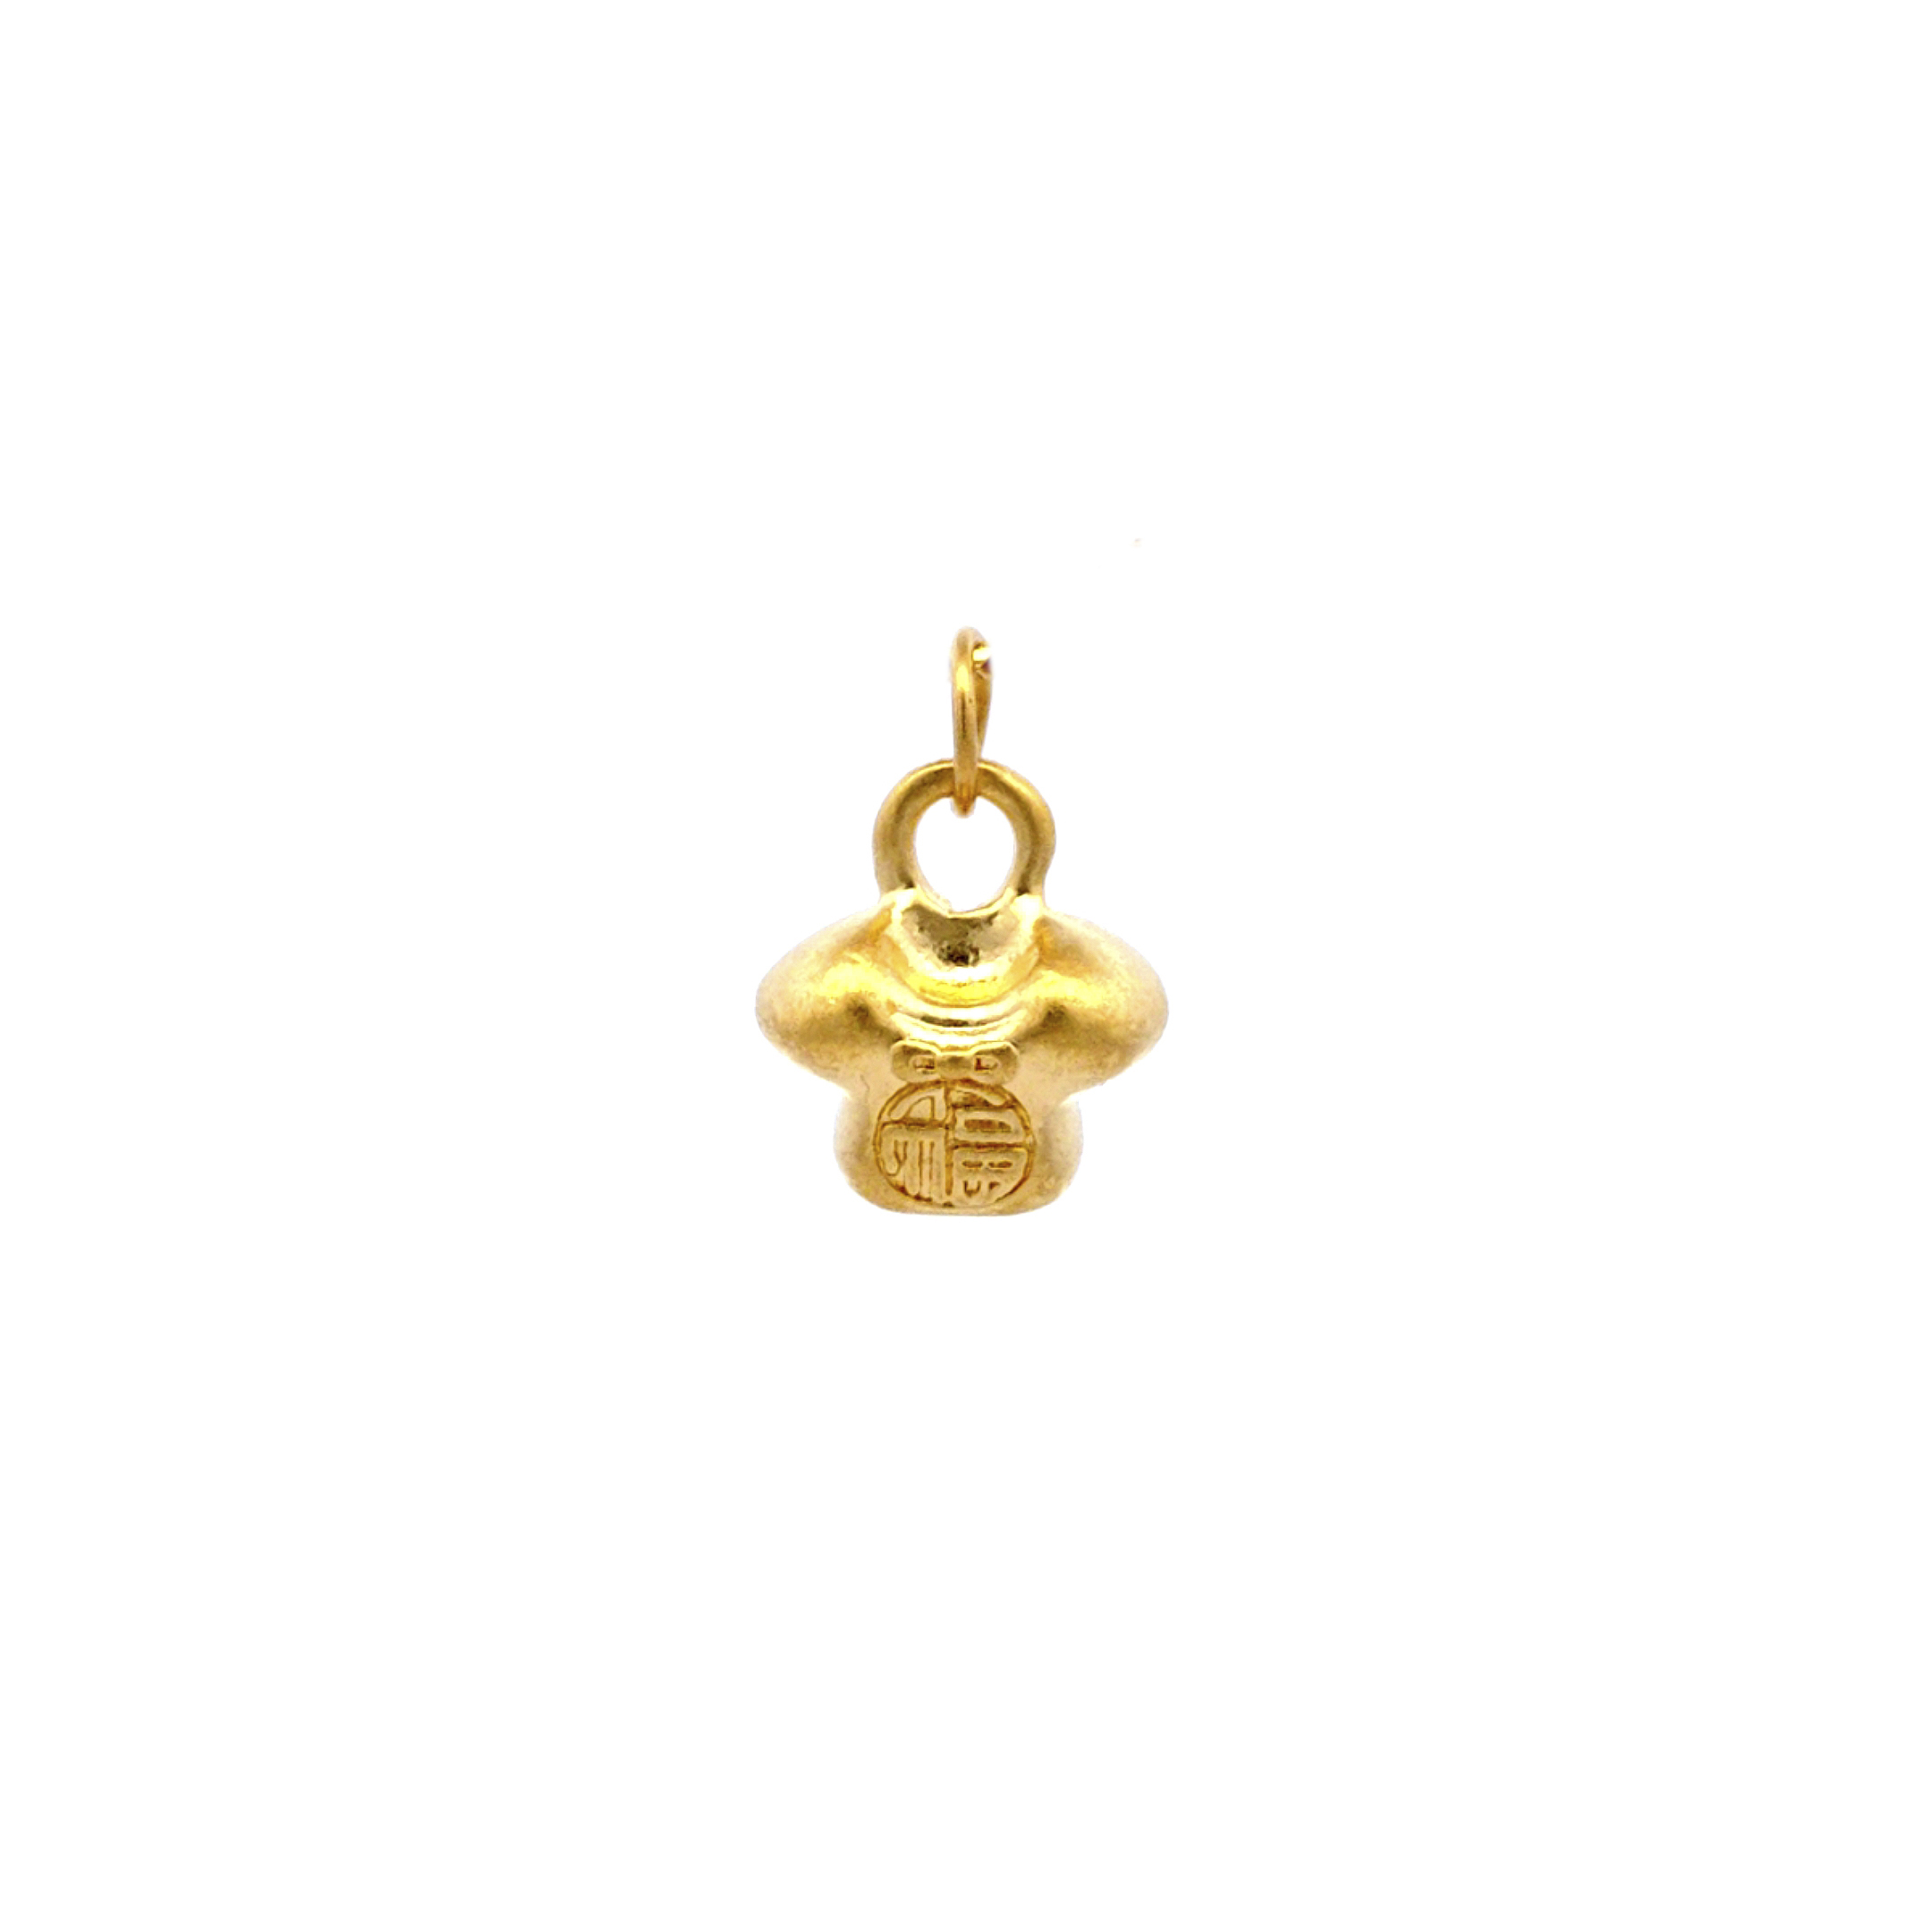 TIANSI 999 (24K) Gold Fortune Golden Clothes Pendant